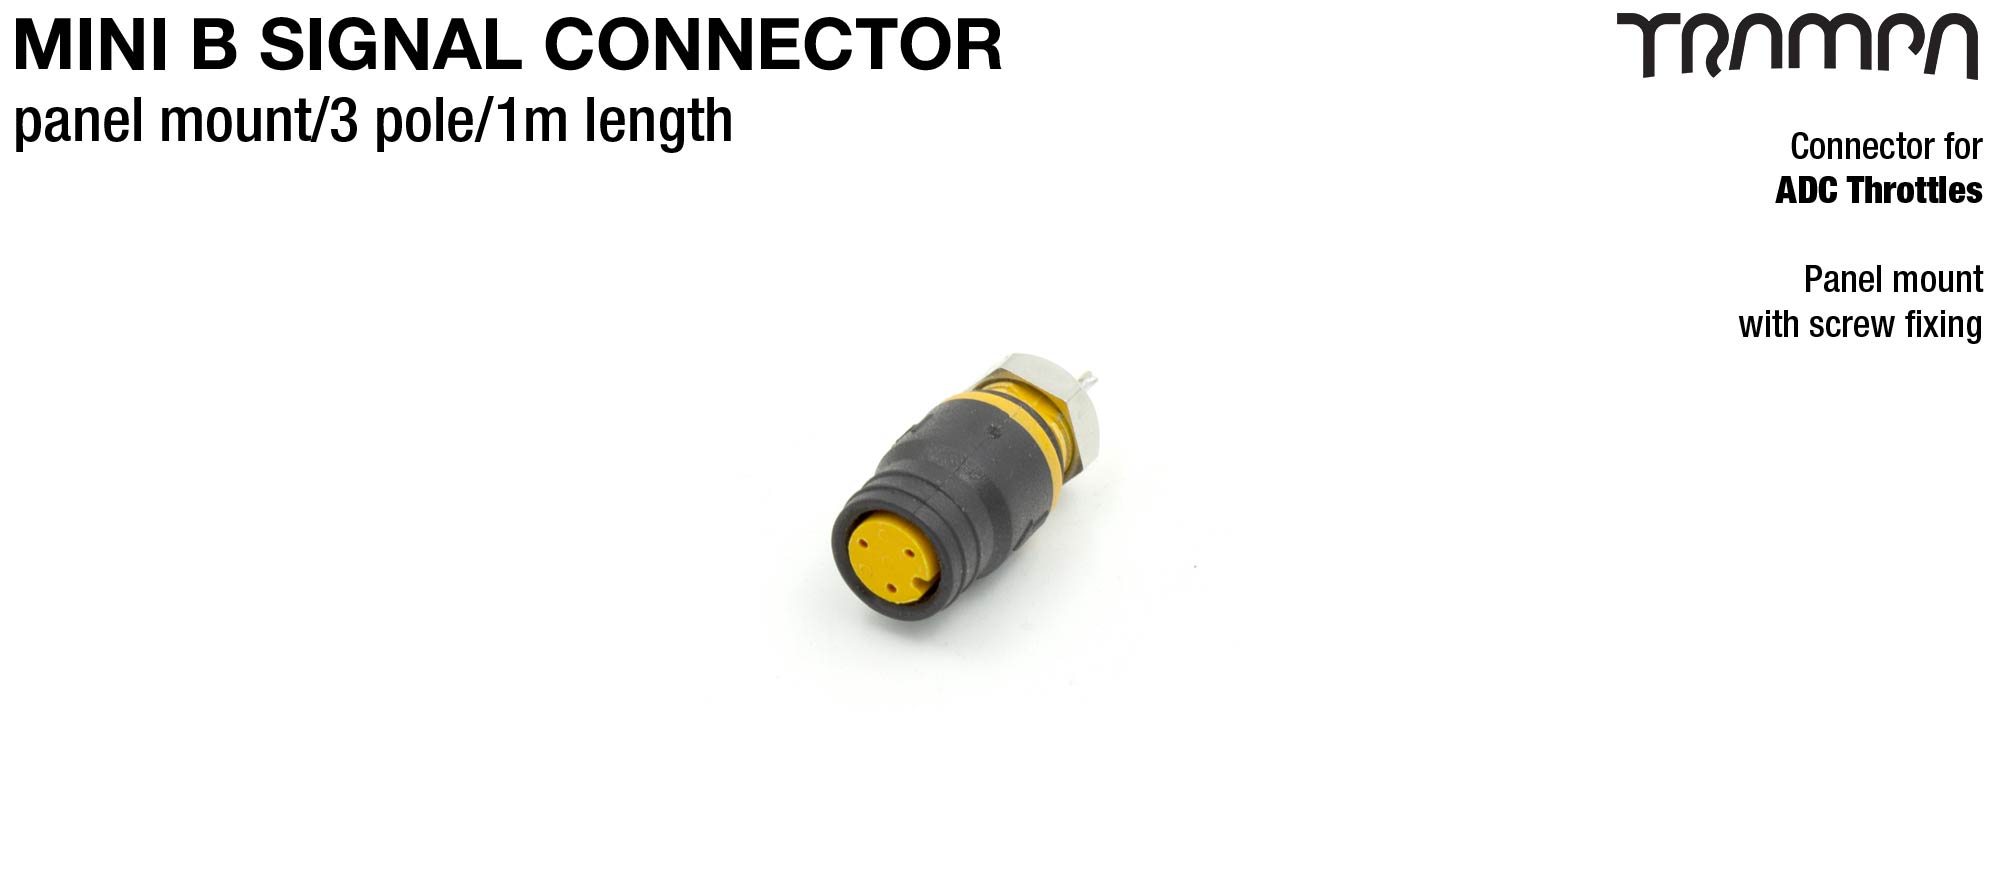 HIGO Mini B signal connector - female - panel mount